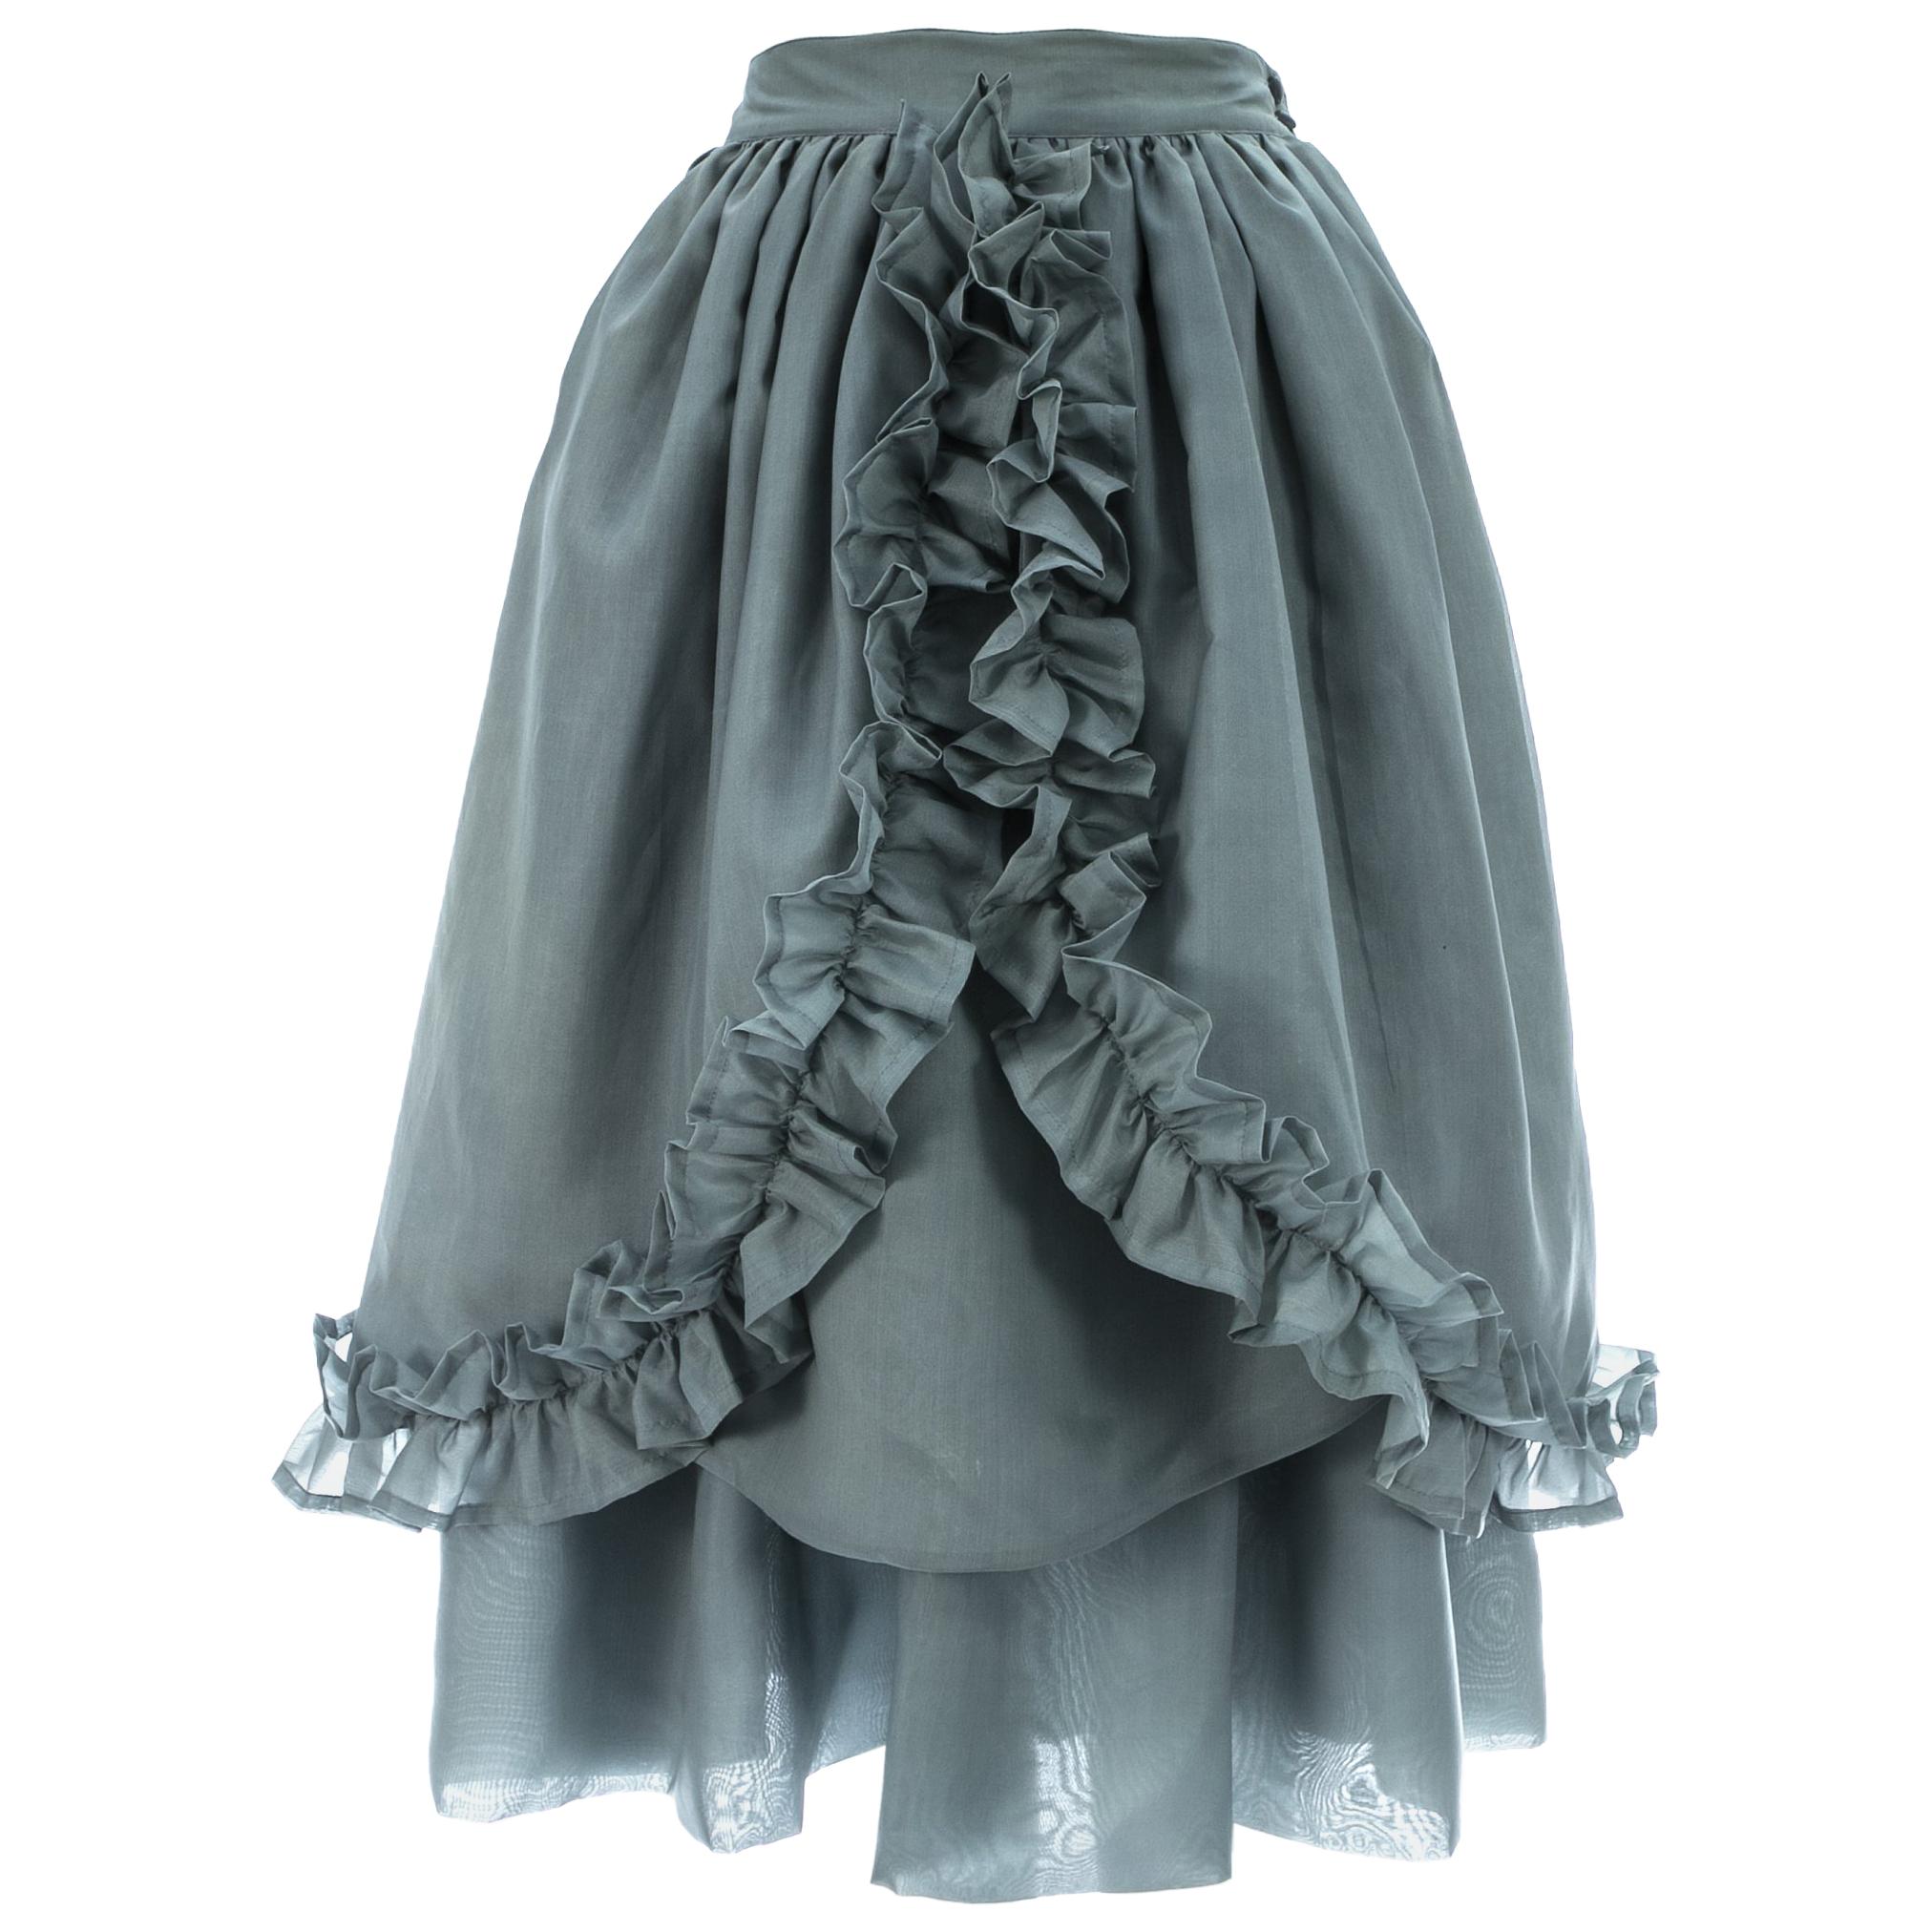 Dolce & Gabbana mint organza bustle skirt with ruffle trim, c. 1980s